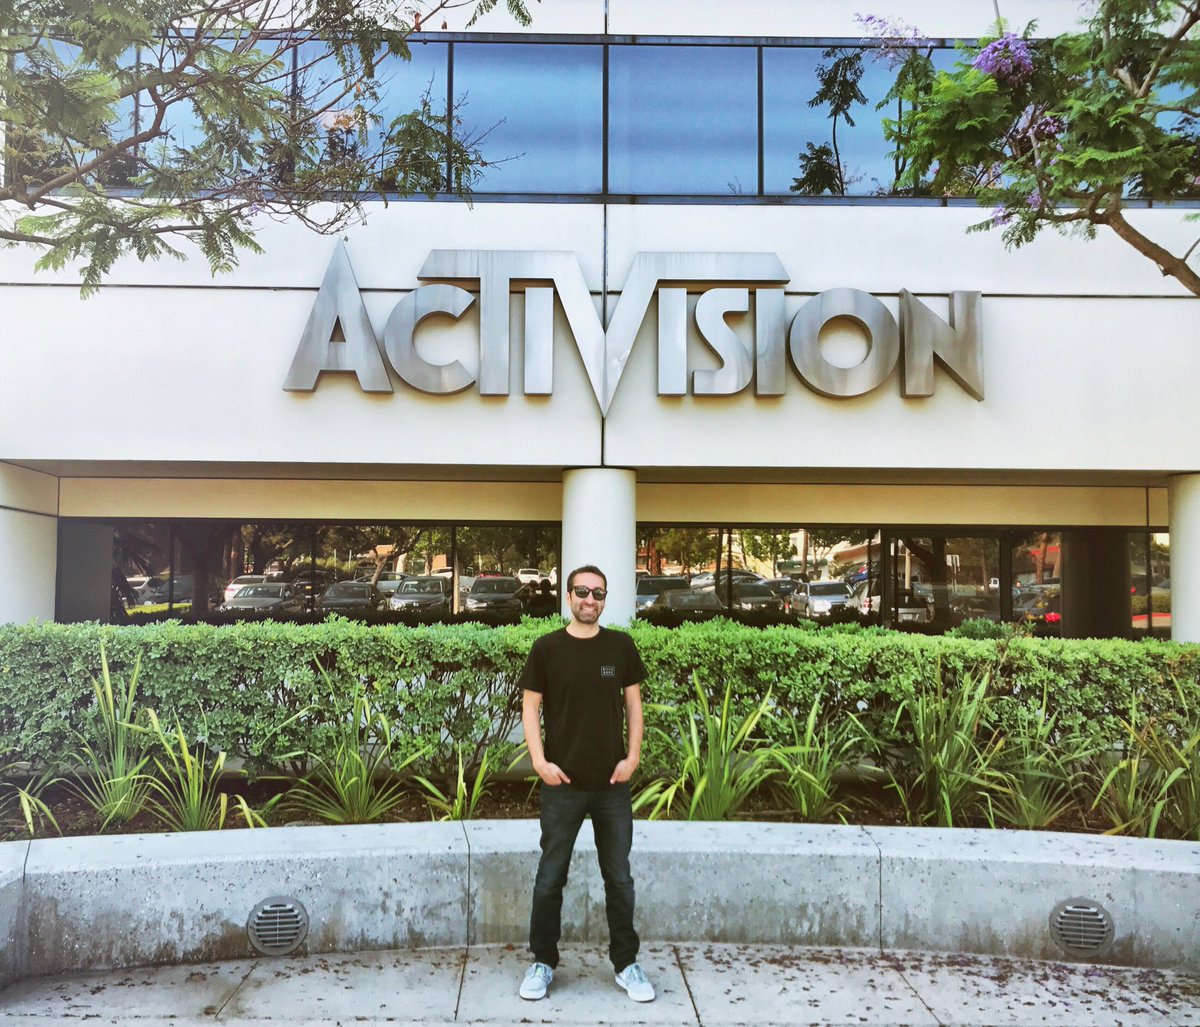 Justin Taylor serves Activision's senior director of digital marketing